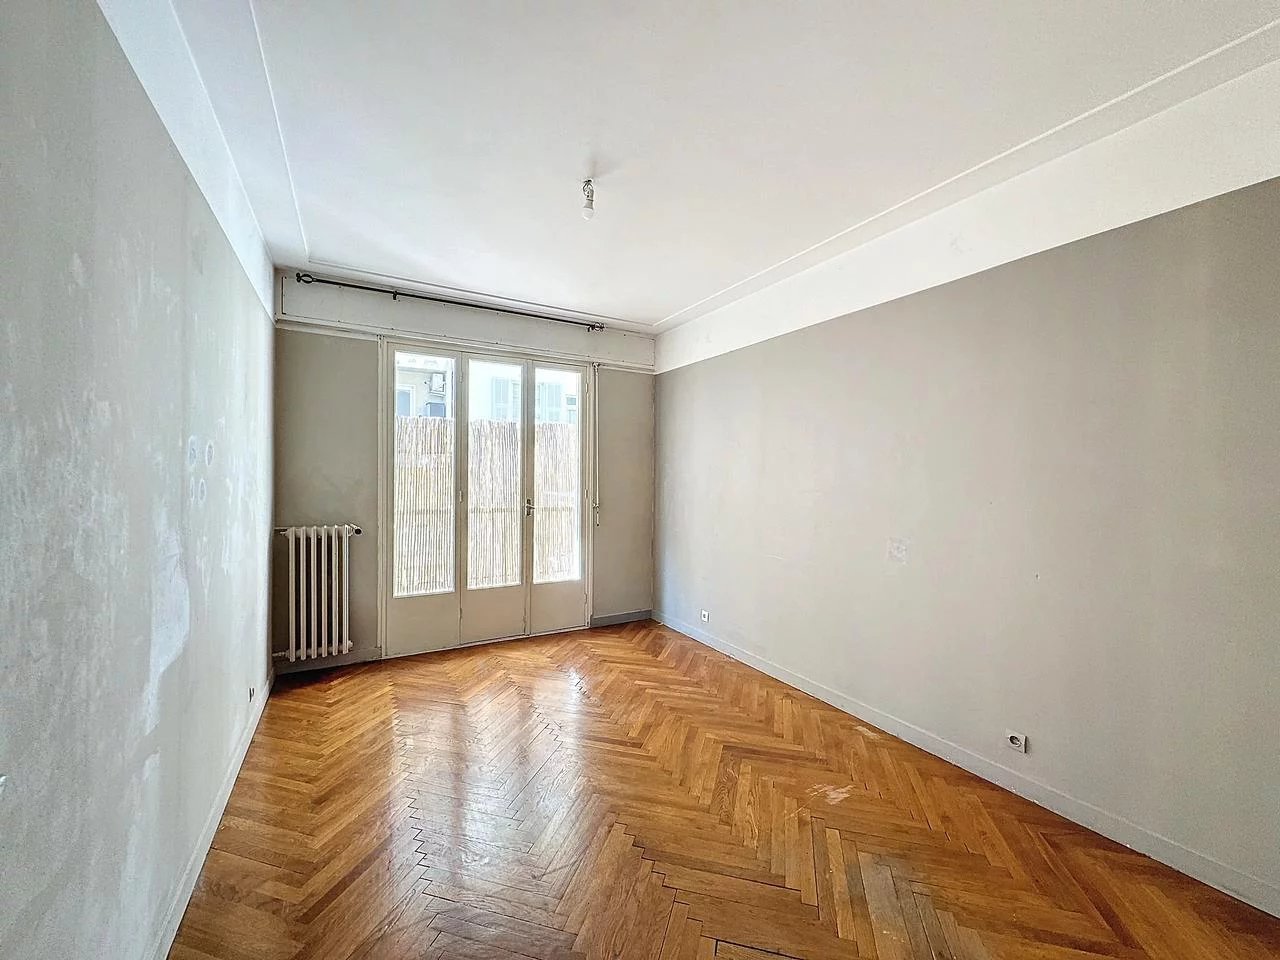 Appartement  3 Locali 71.15m2  In vendita   298 000 €